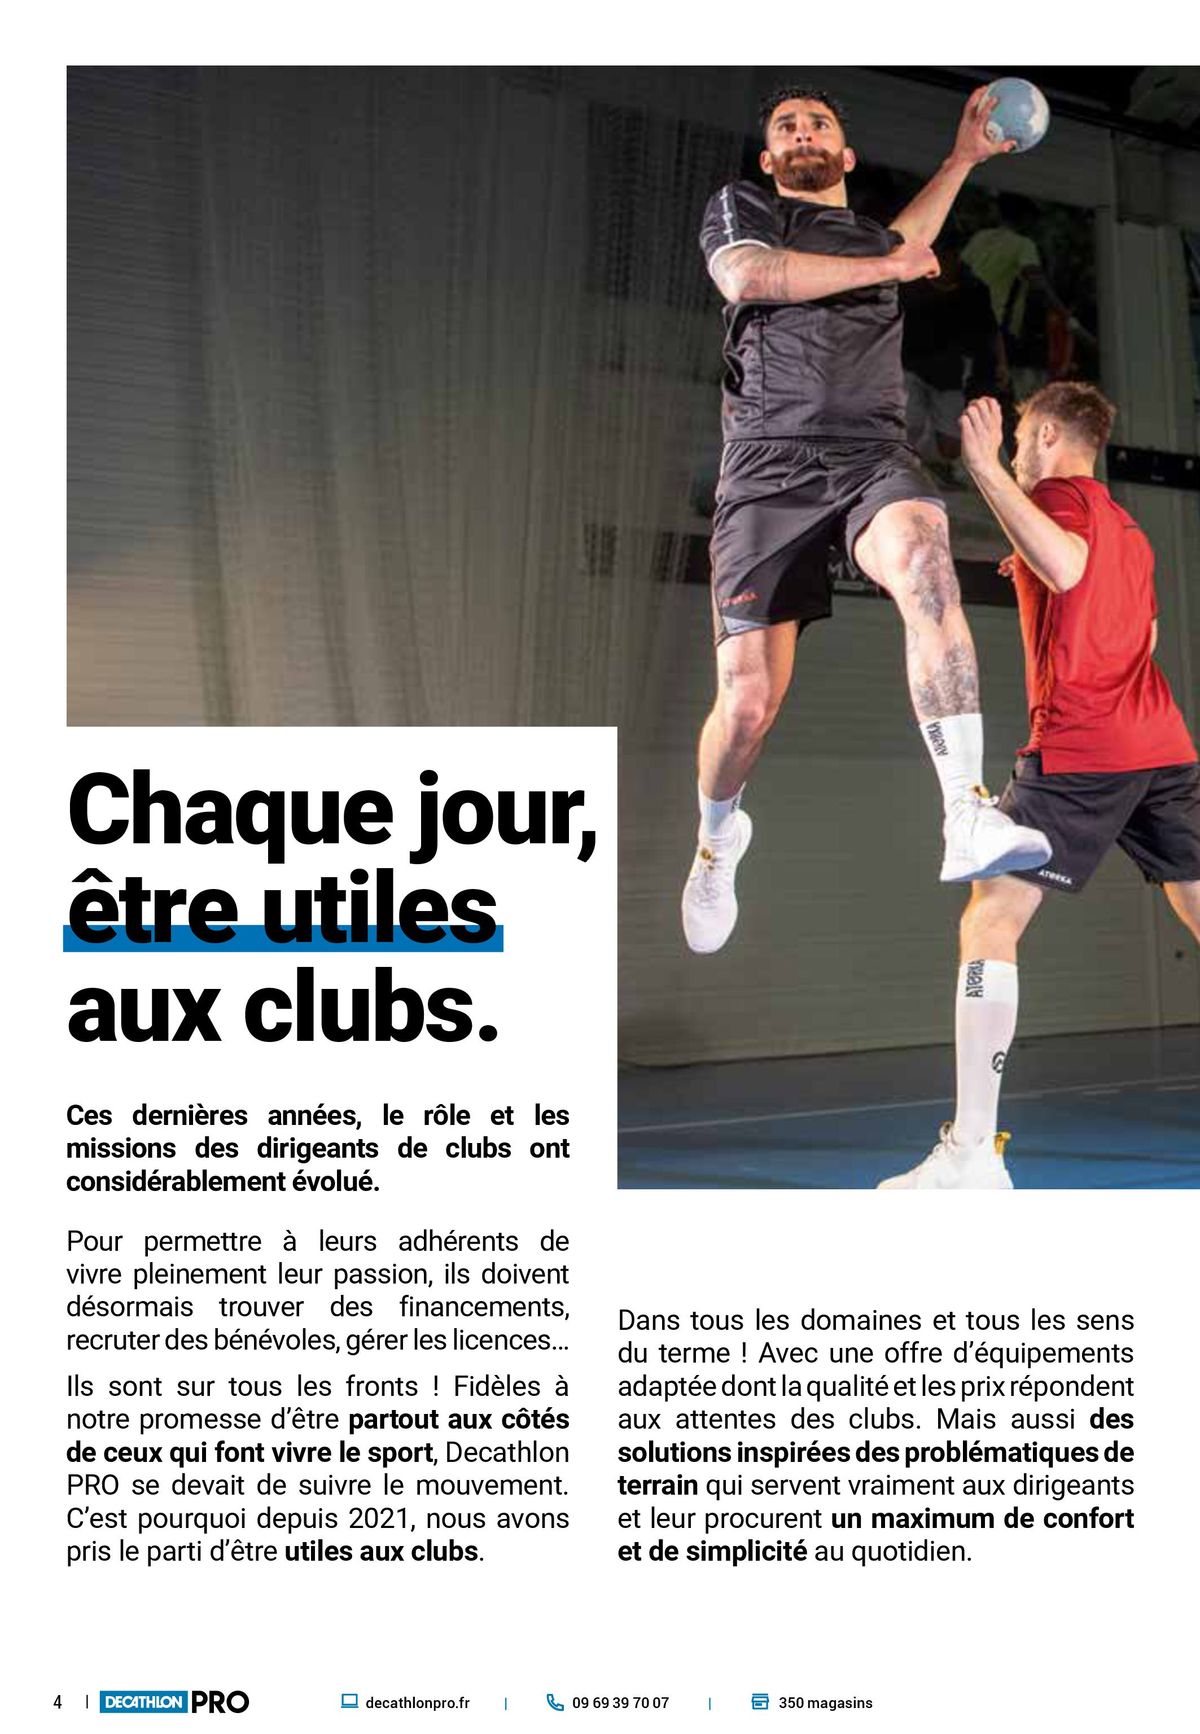 Catalogue Handball, page 00004